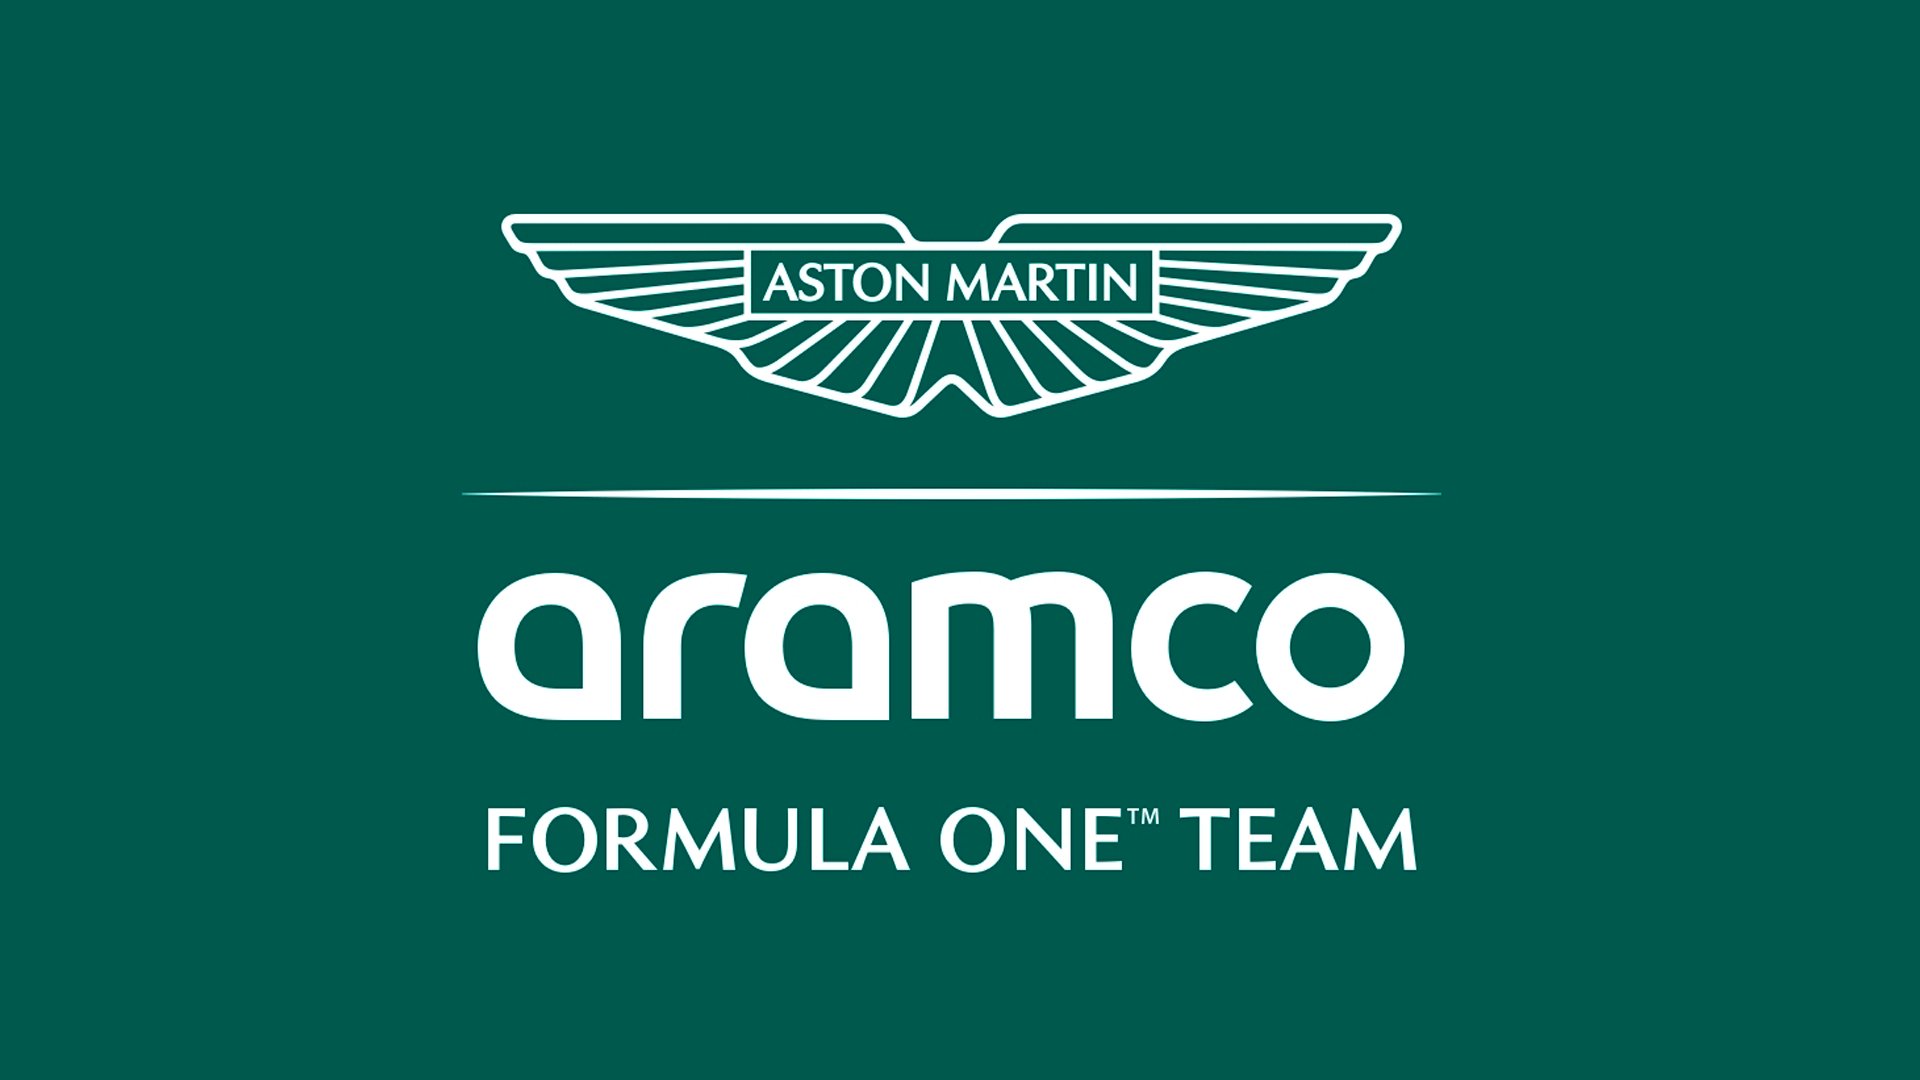 Fórmula Directa on X: "🚨 OFICIAL: Aston Martin CONFIRMA que Aramco será su patrocinador principal en 2024. 👉 El equipo pasará a llamarse Aston Martin Aramco Formula One® Team. #F1" / X